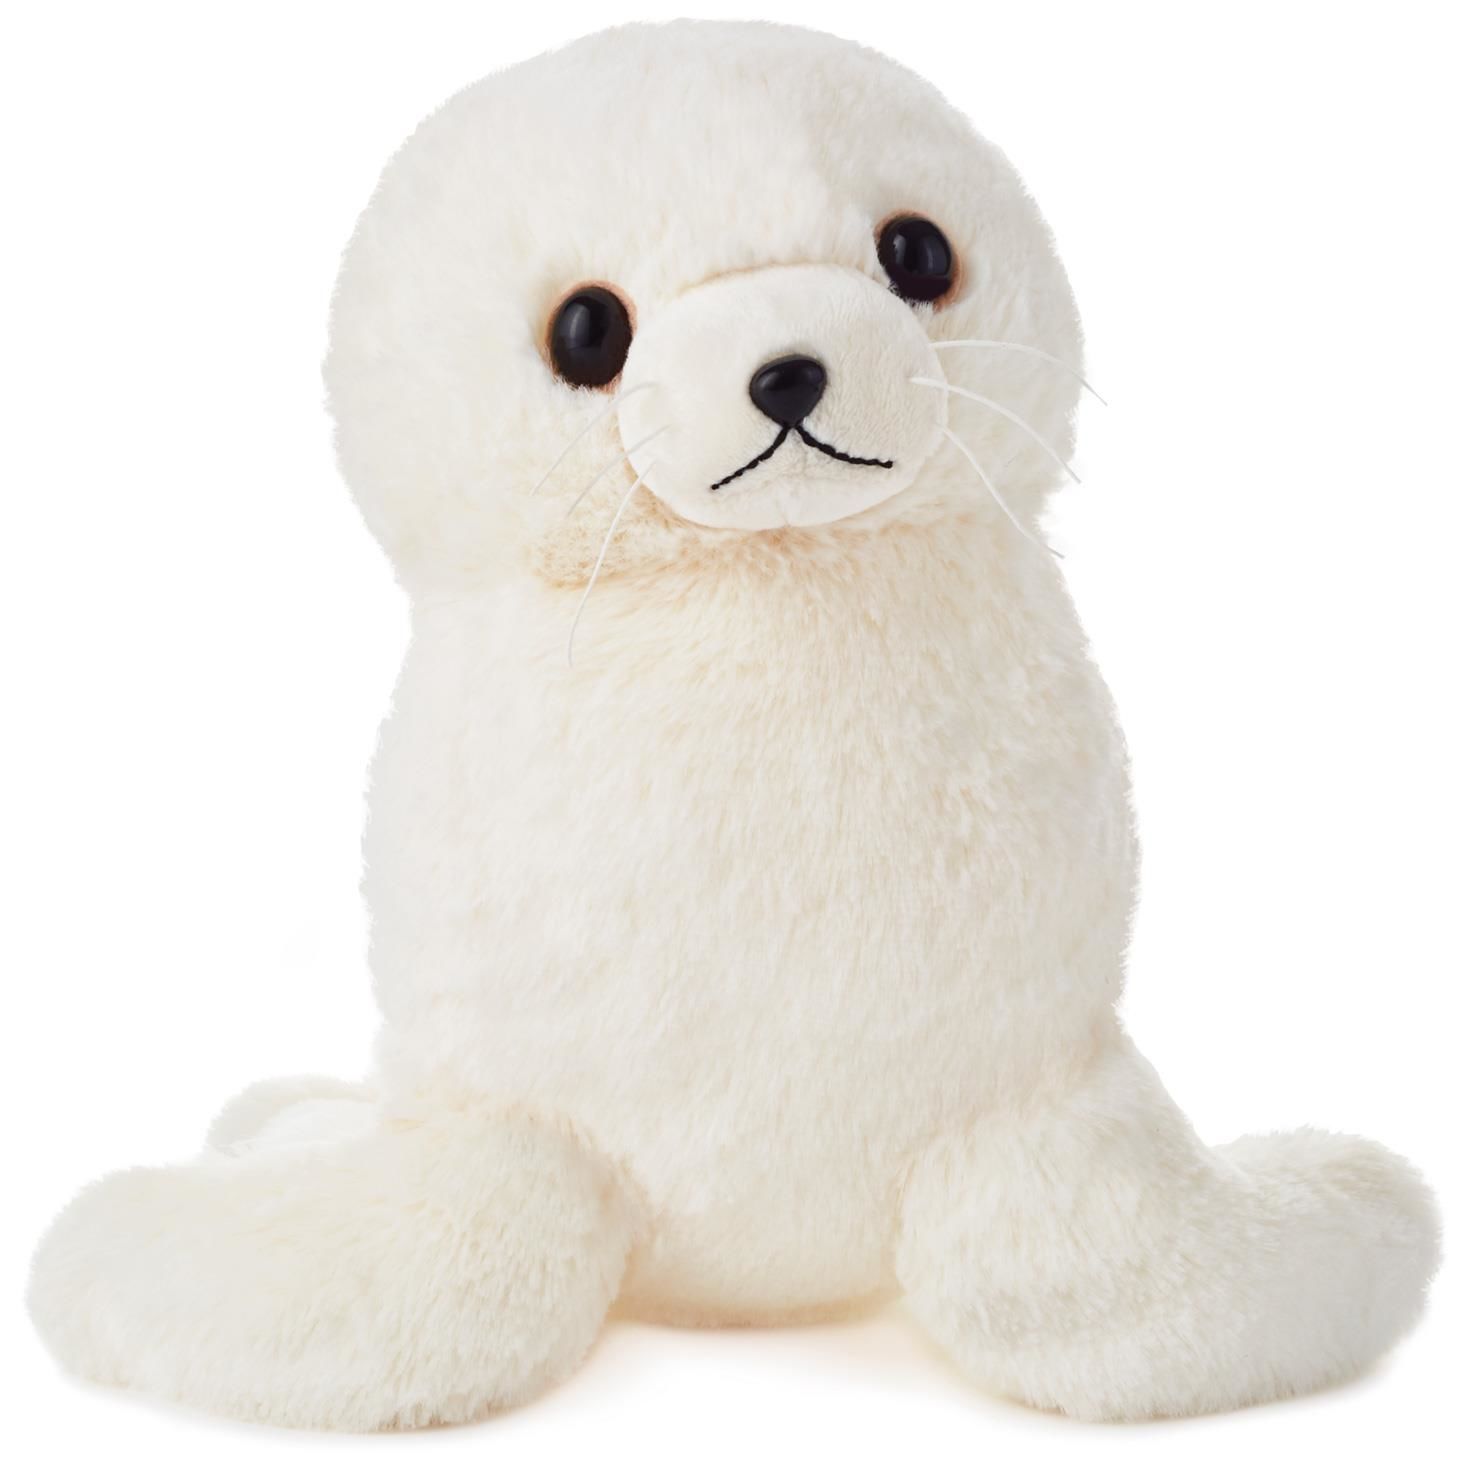 Baby Seal Stuffed Animal, 8